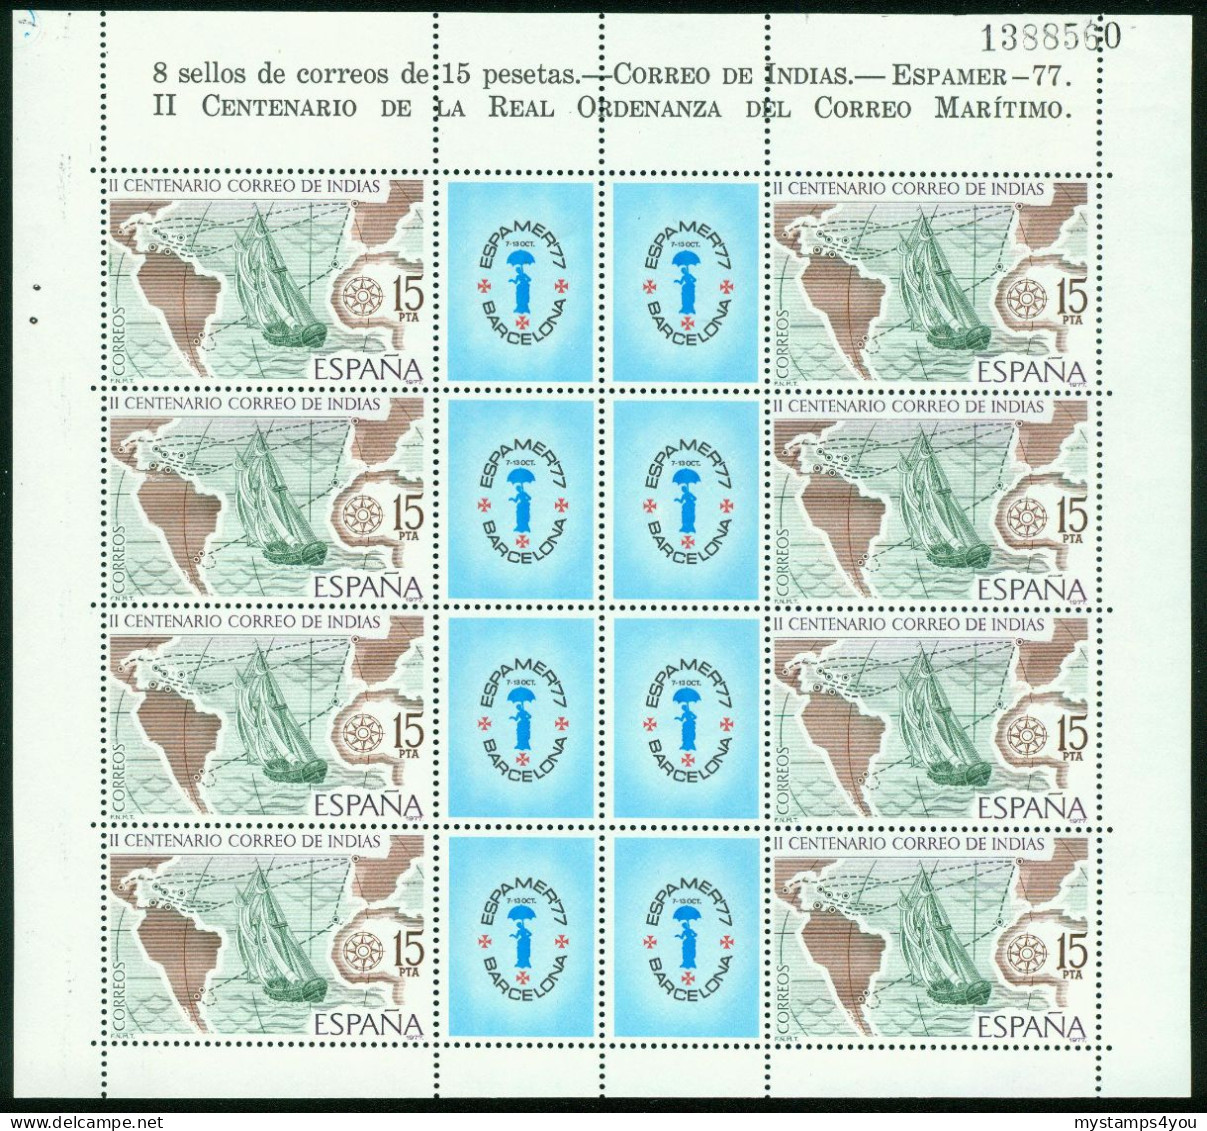 Bm Spain 1977 MiNr 2330 Kleinbogen Sheet MNH | Bicent Of Mail To The Indies. "Espamer 77" Stamp Exn Barcelona #bog-0135 - Blocks & Kleinbögen